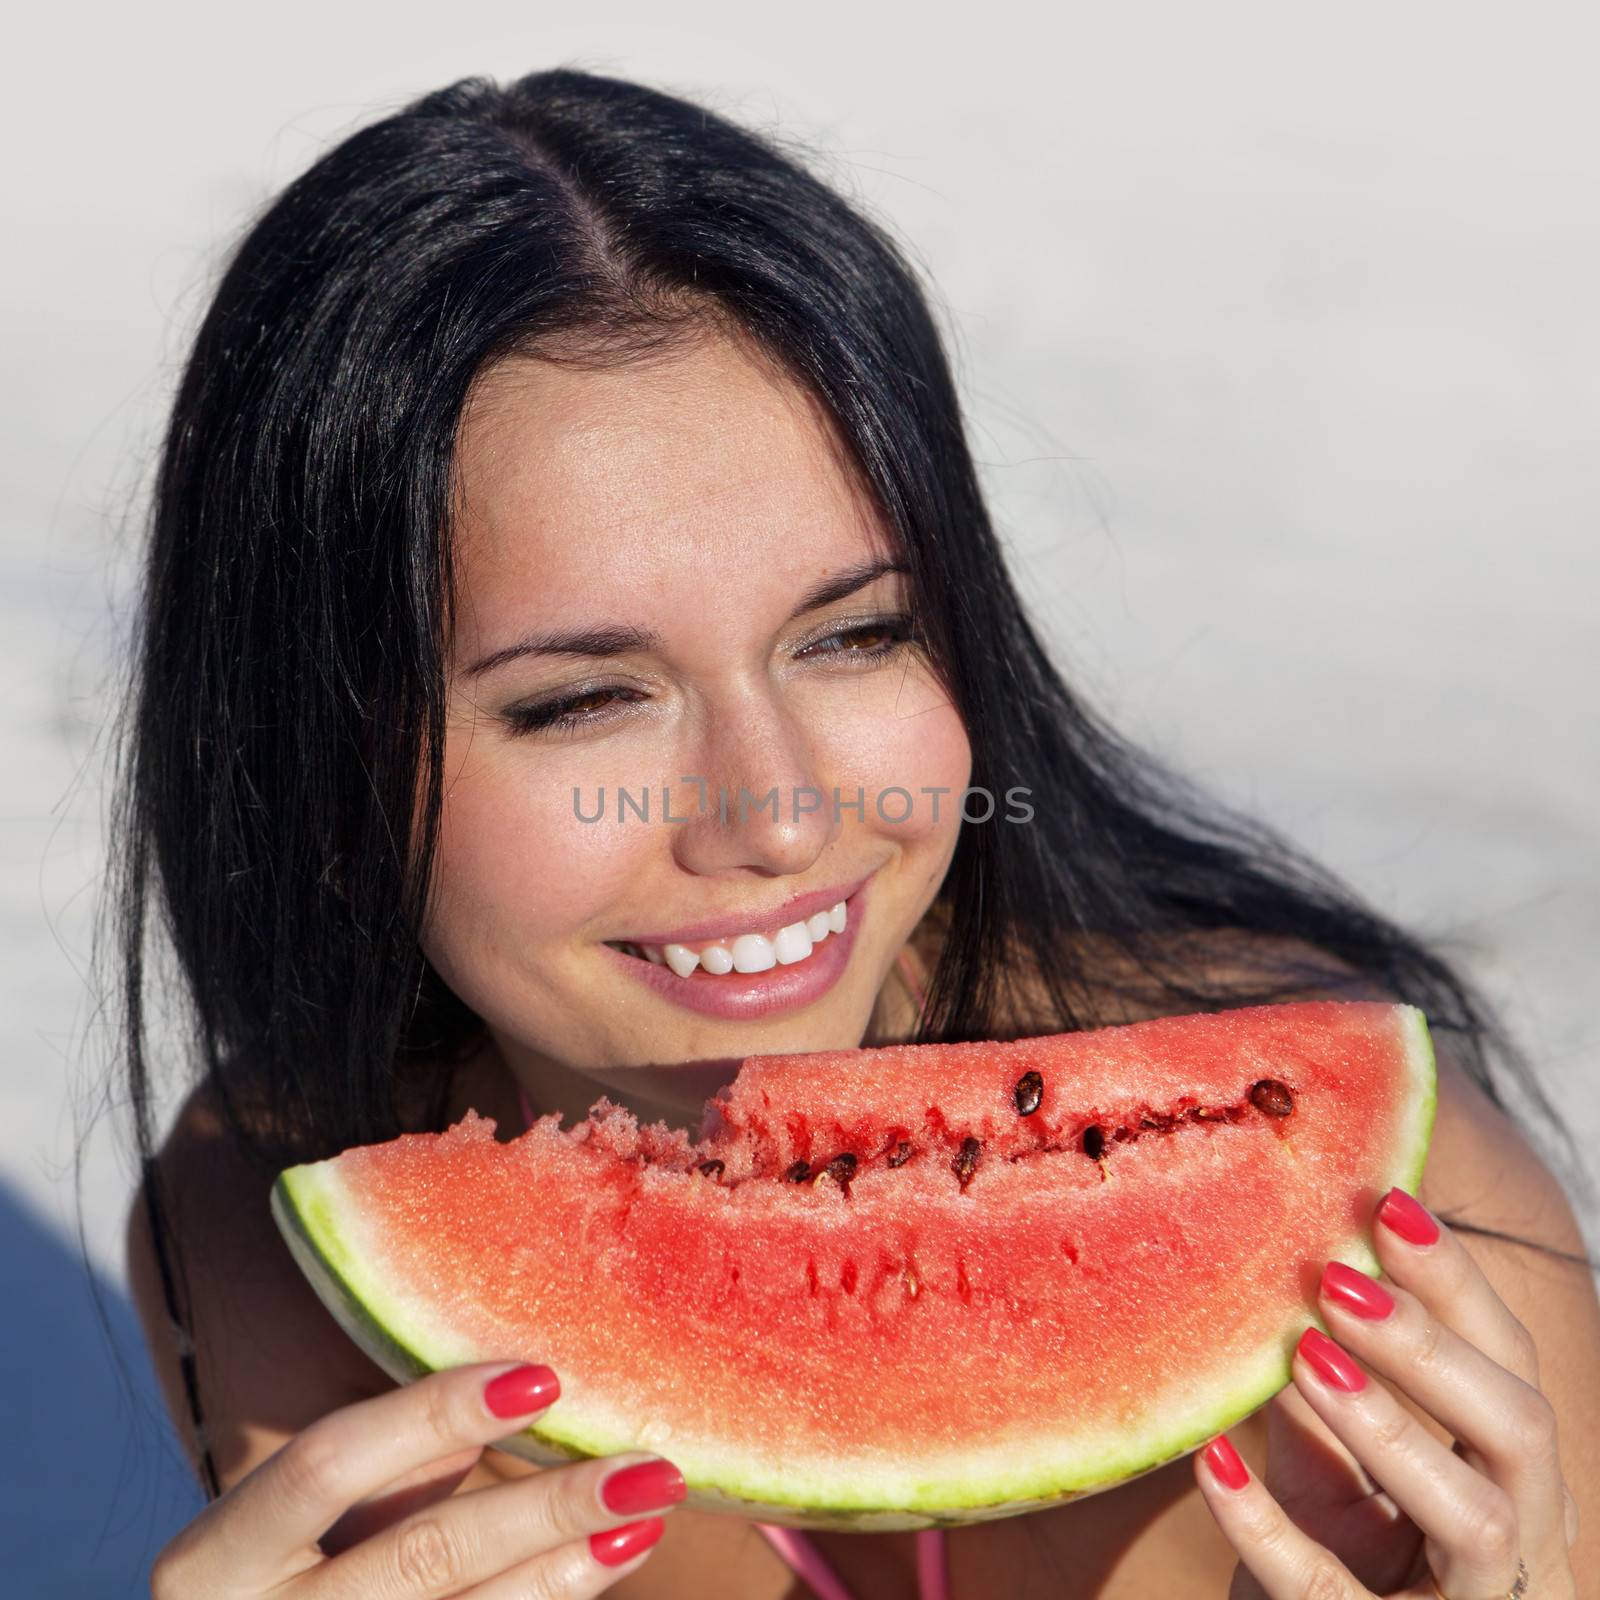 smiling girl eats slice of juicy ripe watermelon